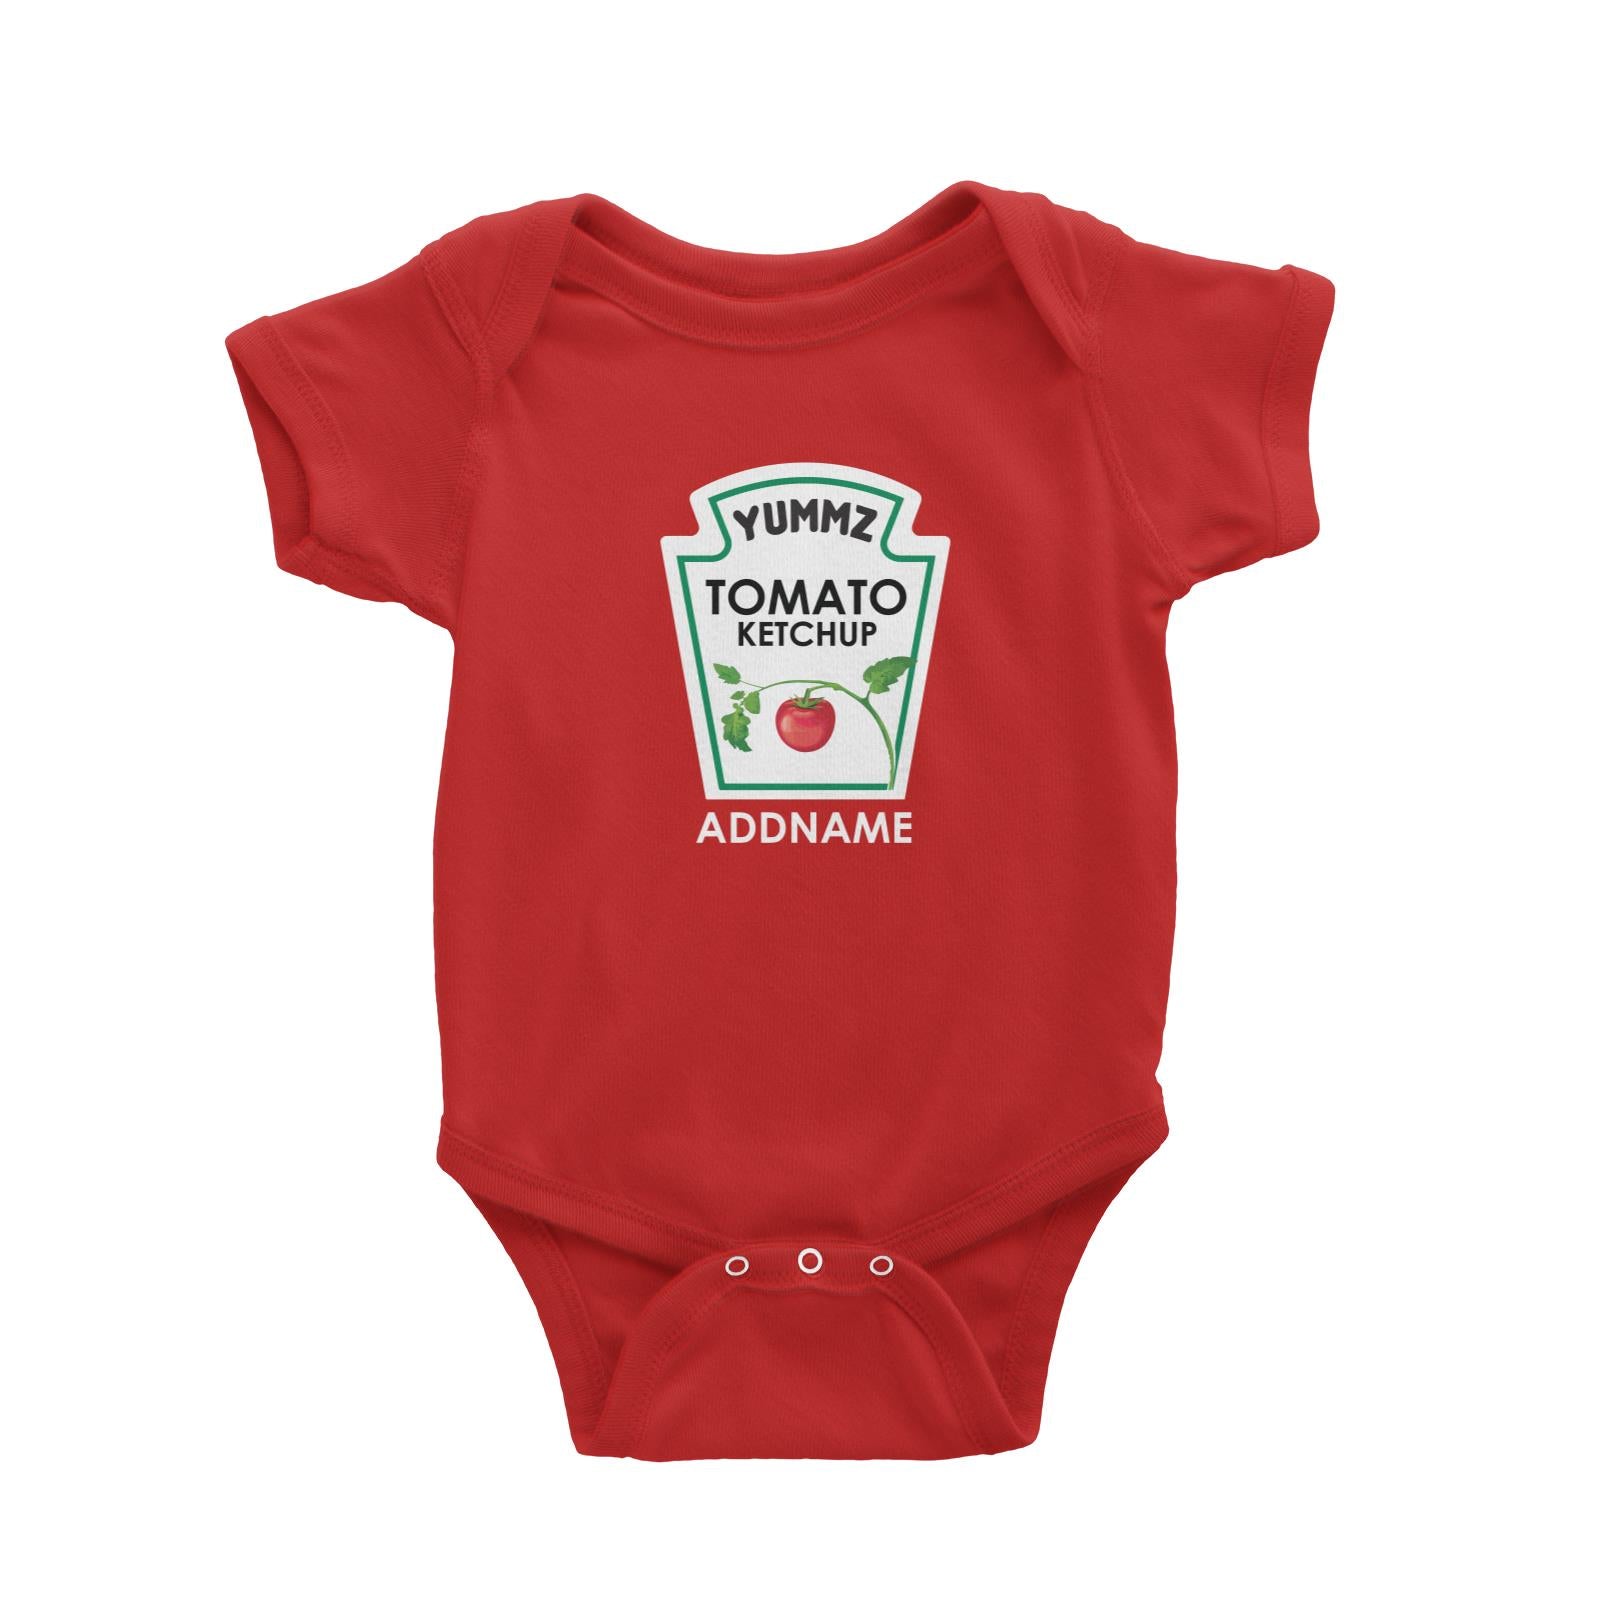 Yummz Tomato Ketchup Baby Romper